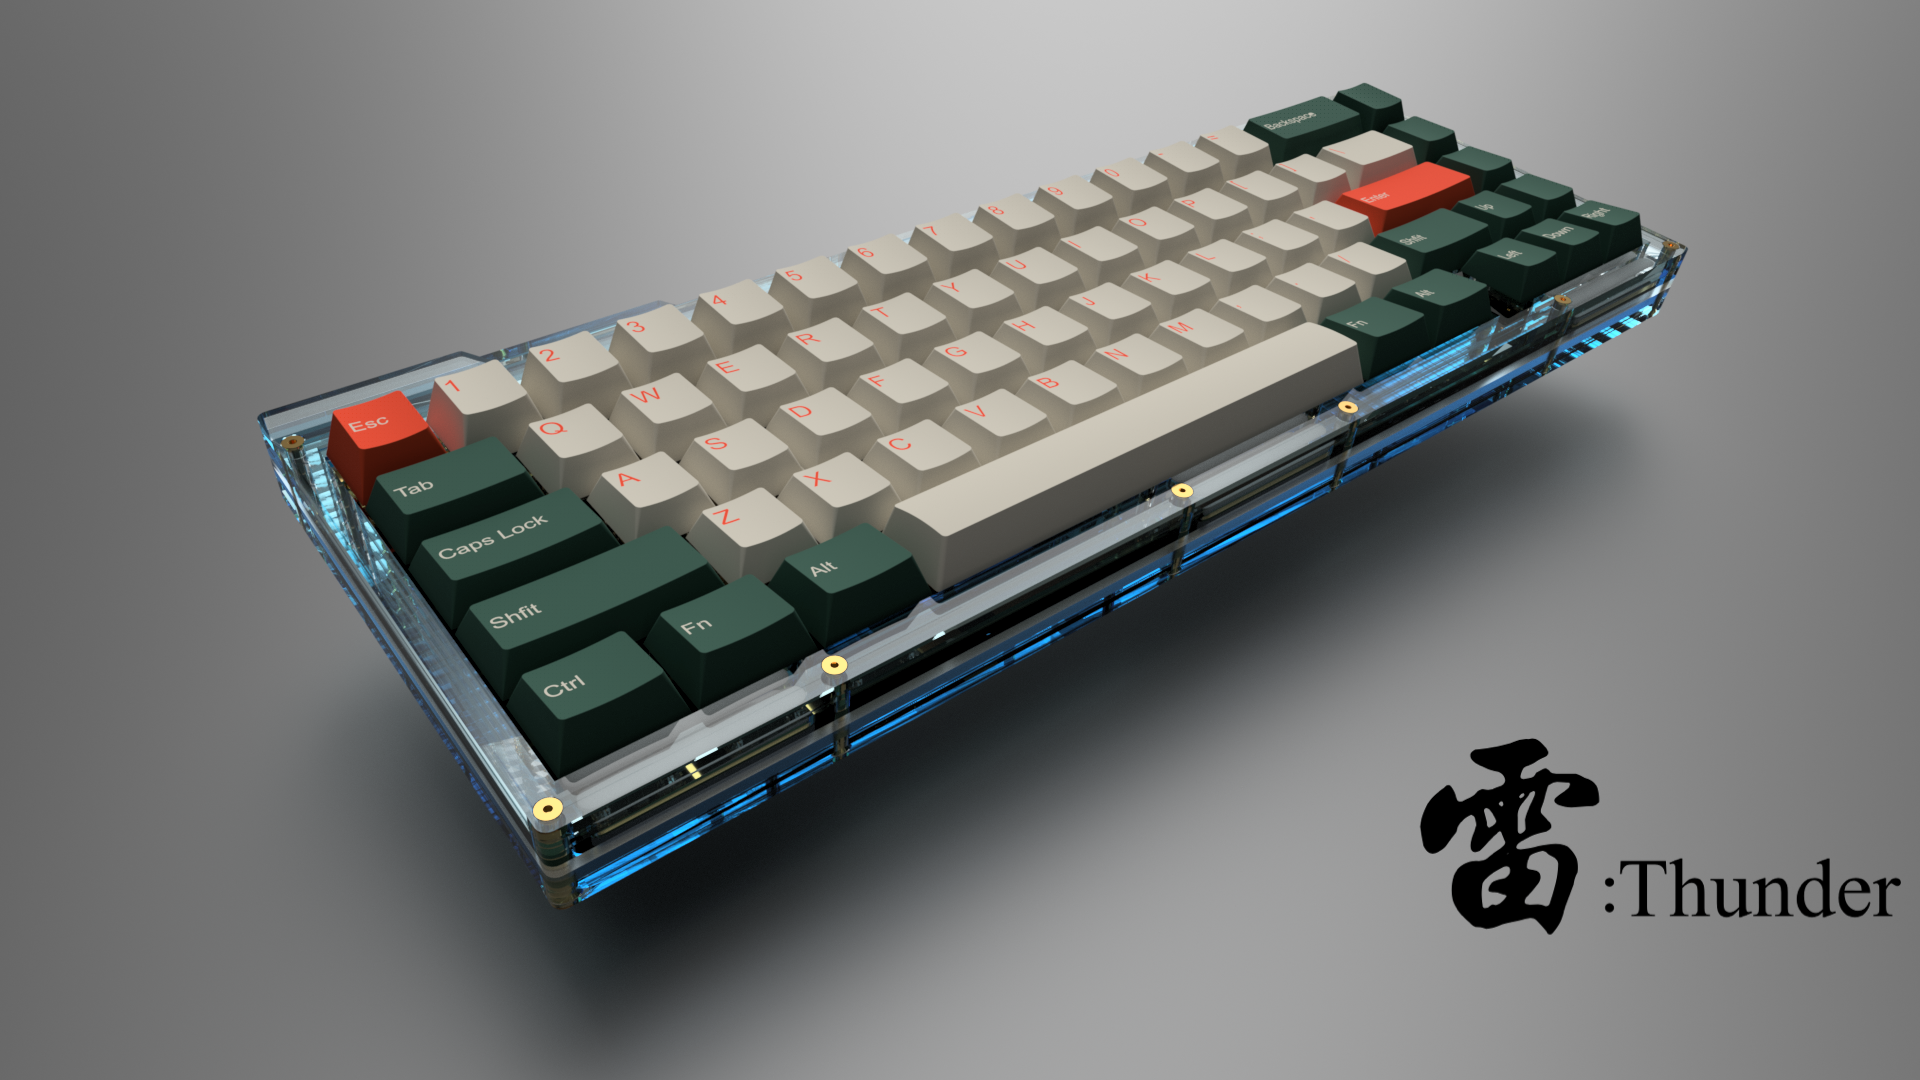 NEO Palette G67 Keyboard Kit